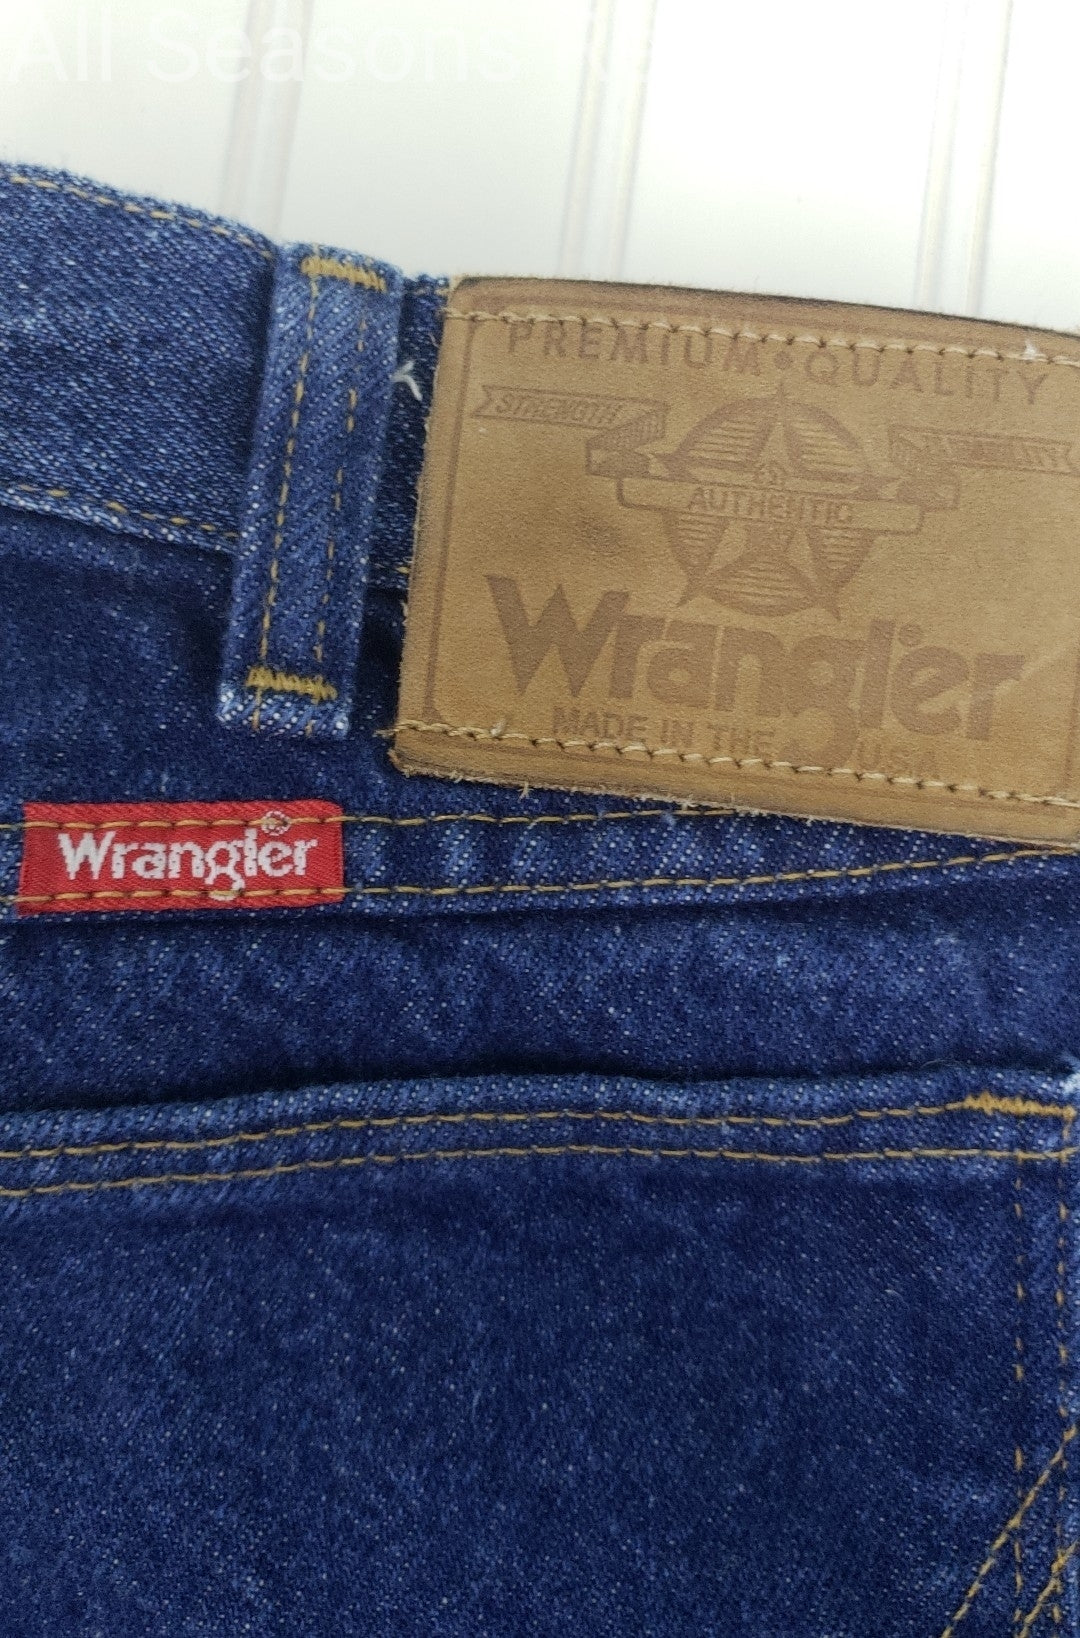 Wrangler Jeans 36x30 USA MADE Vintage 99902PW 2H – All Seasons Resale